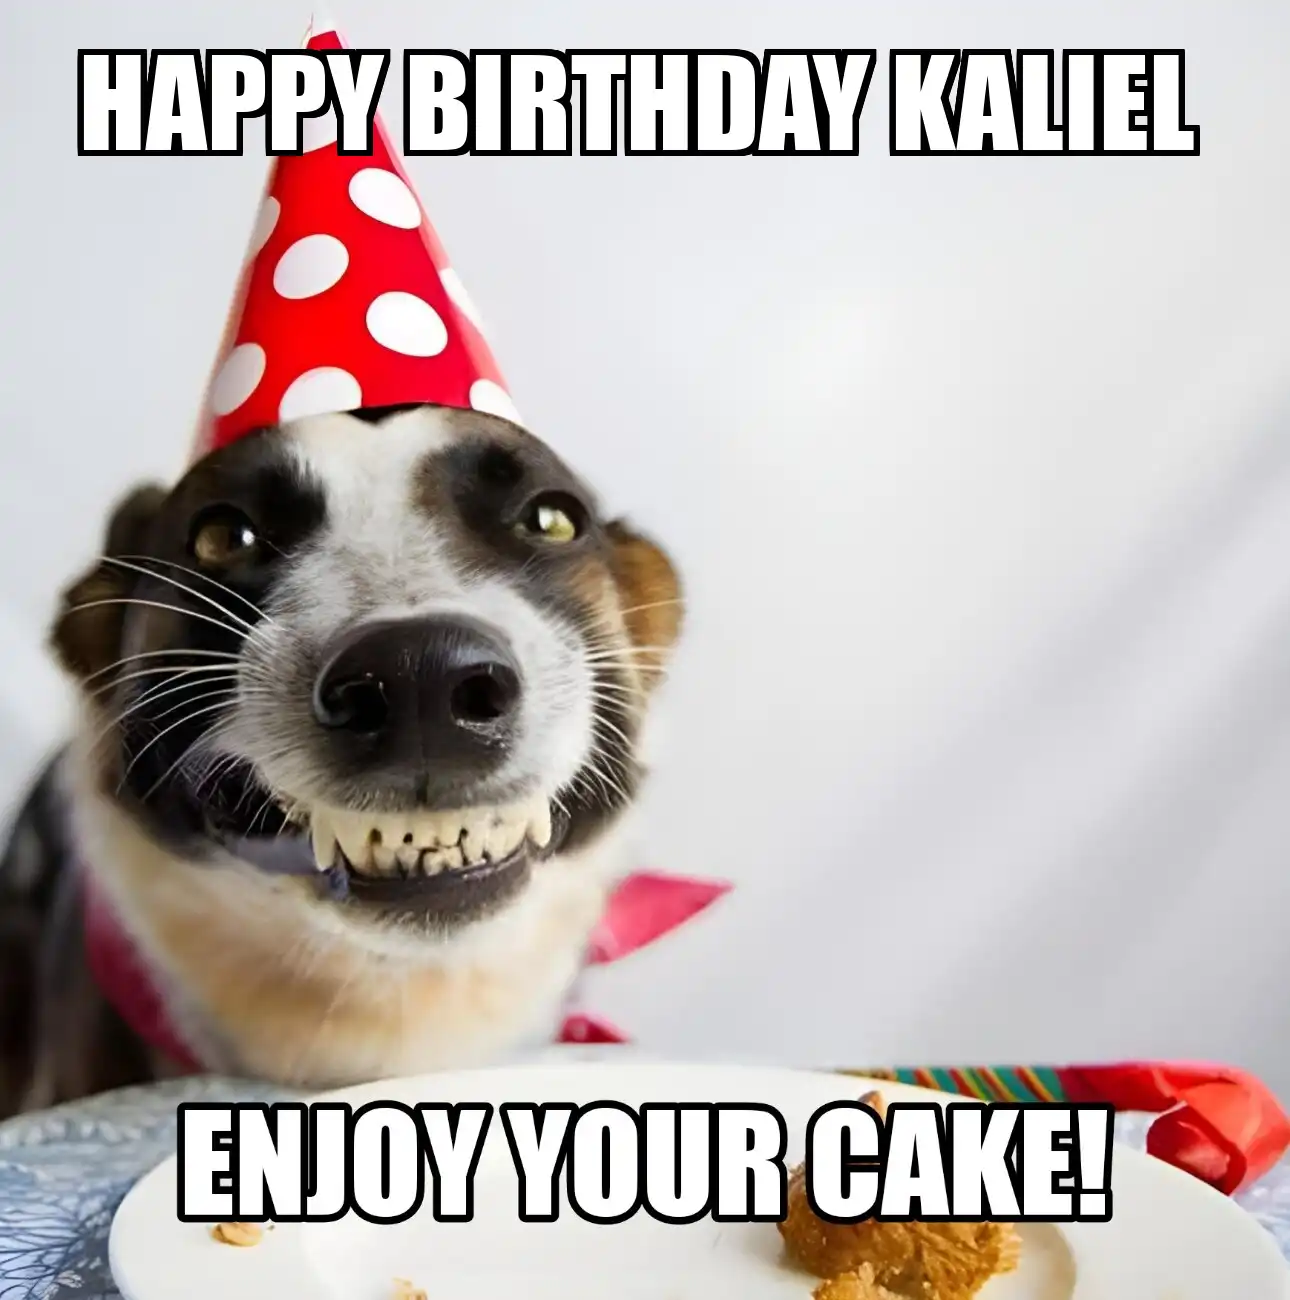 Happy Birthday Kaliel Enjoy Your Cake Dog Meme